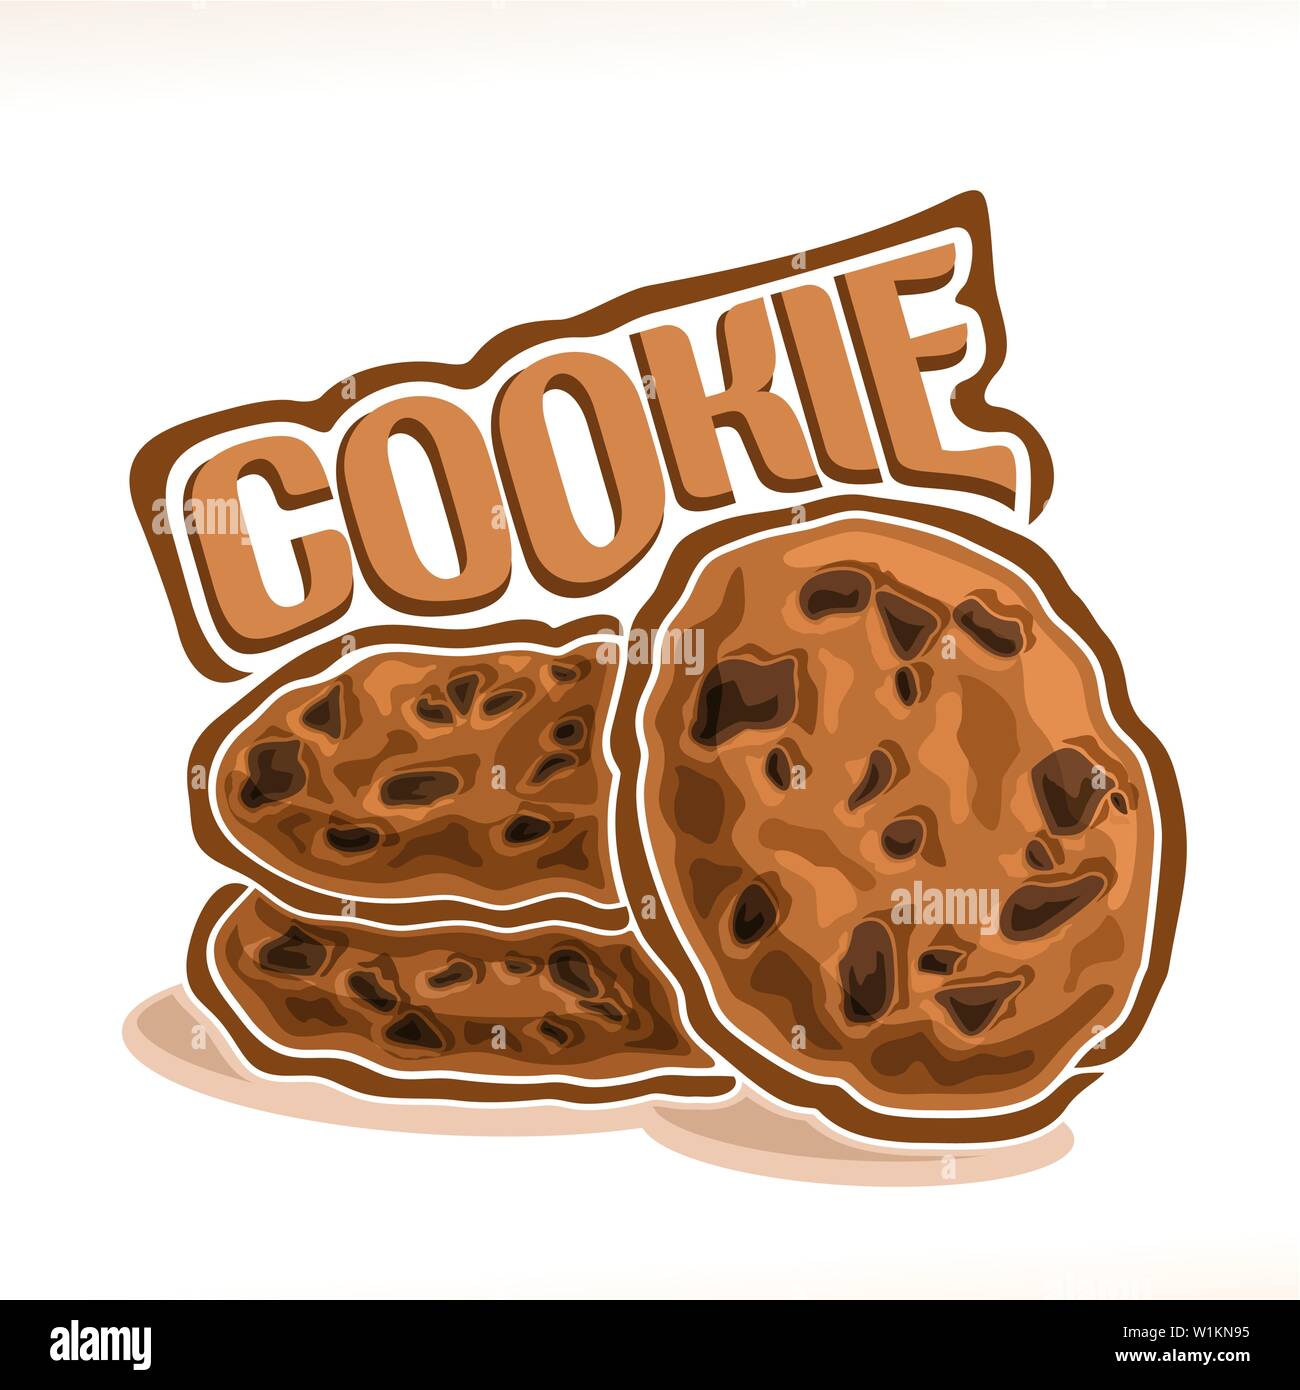 Vektor logo für Cookie Stock Vektor